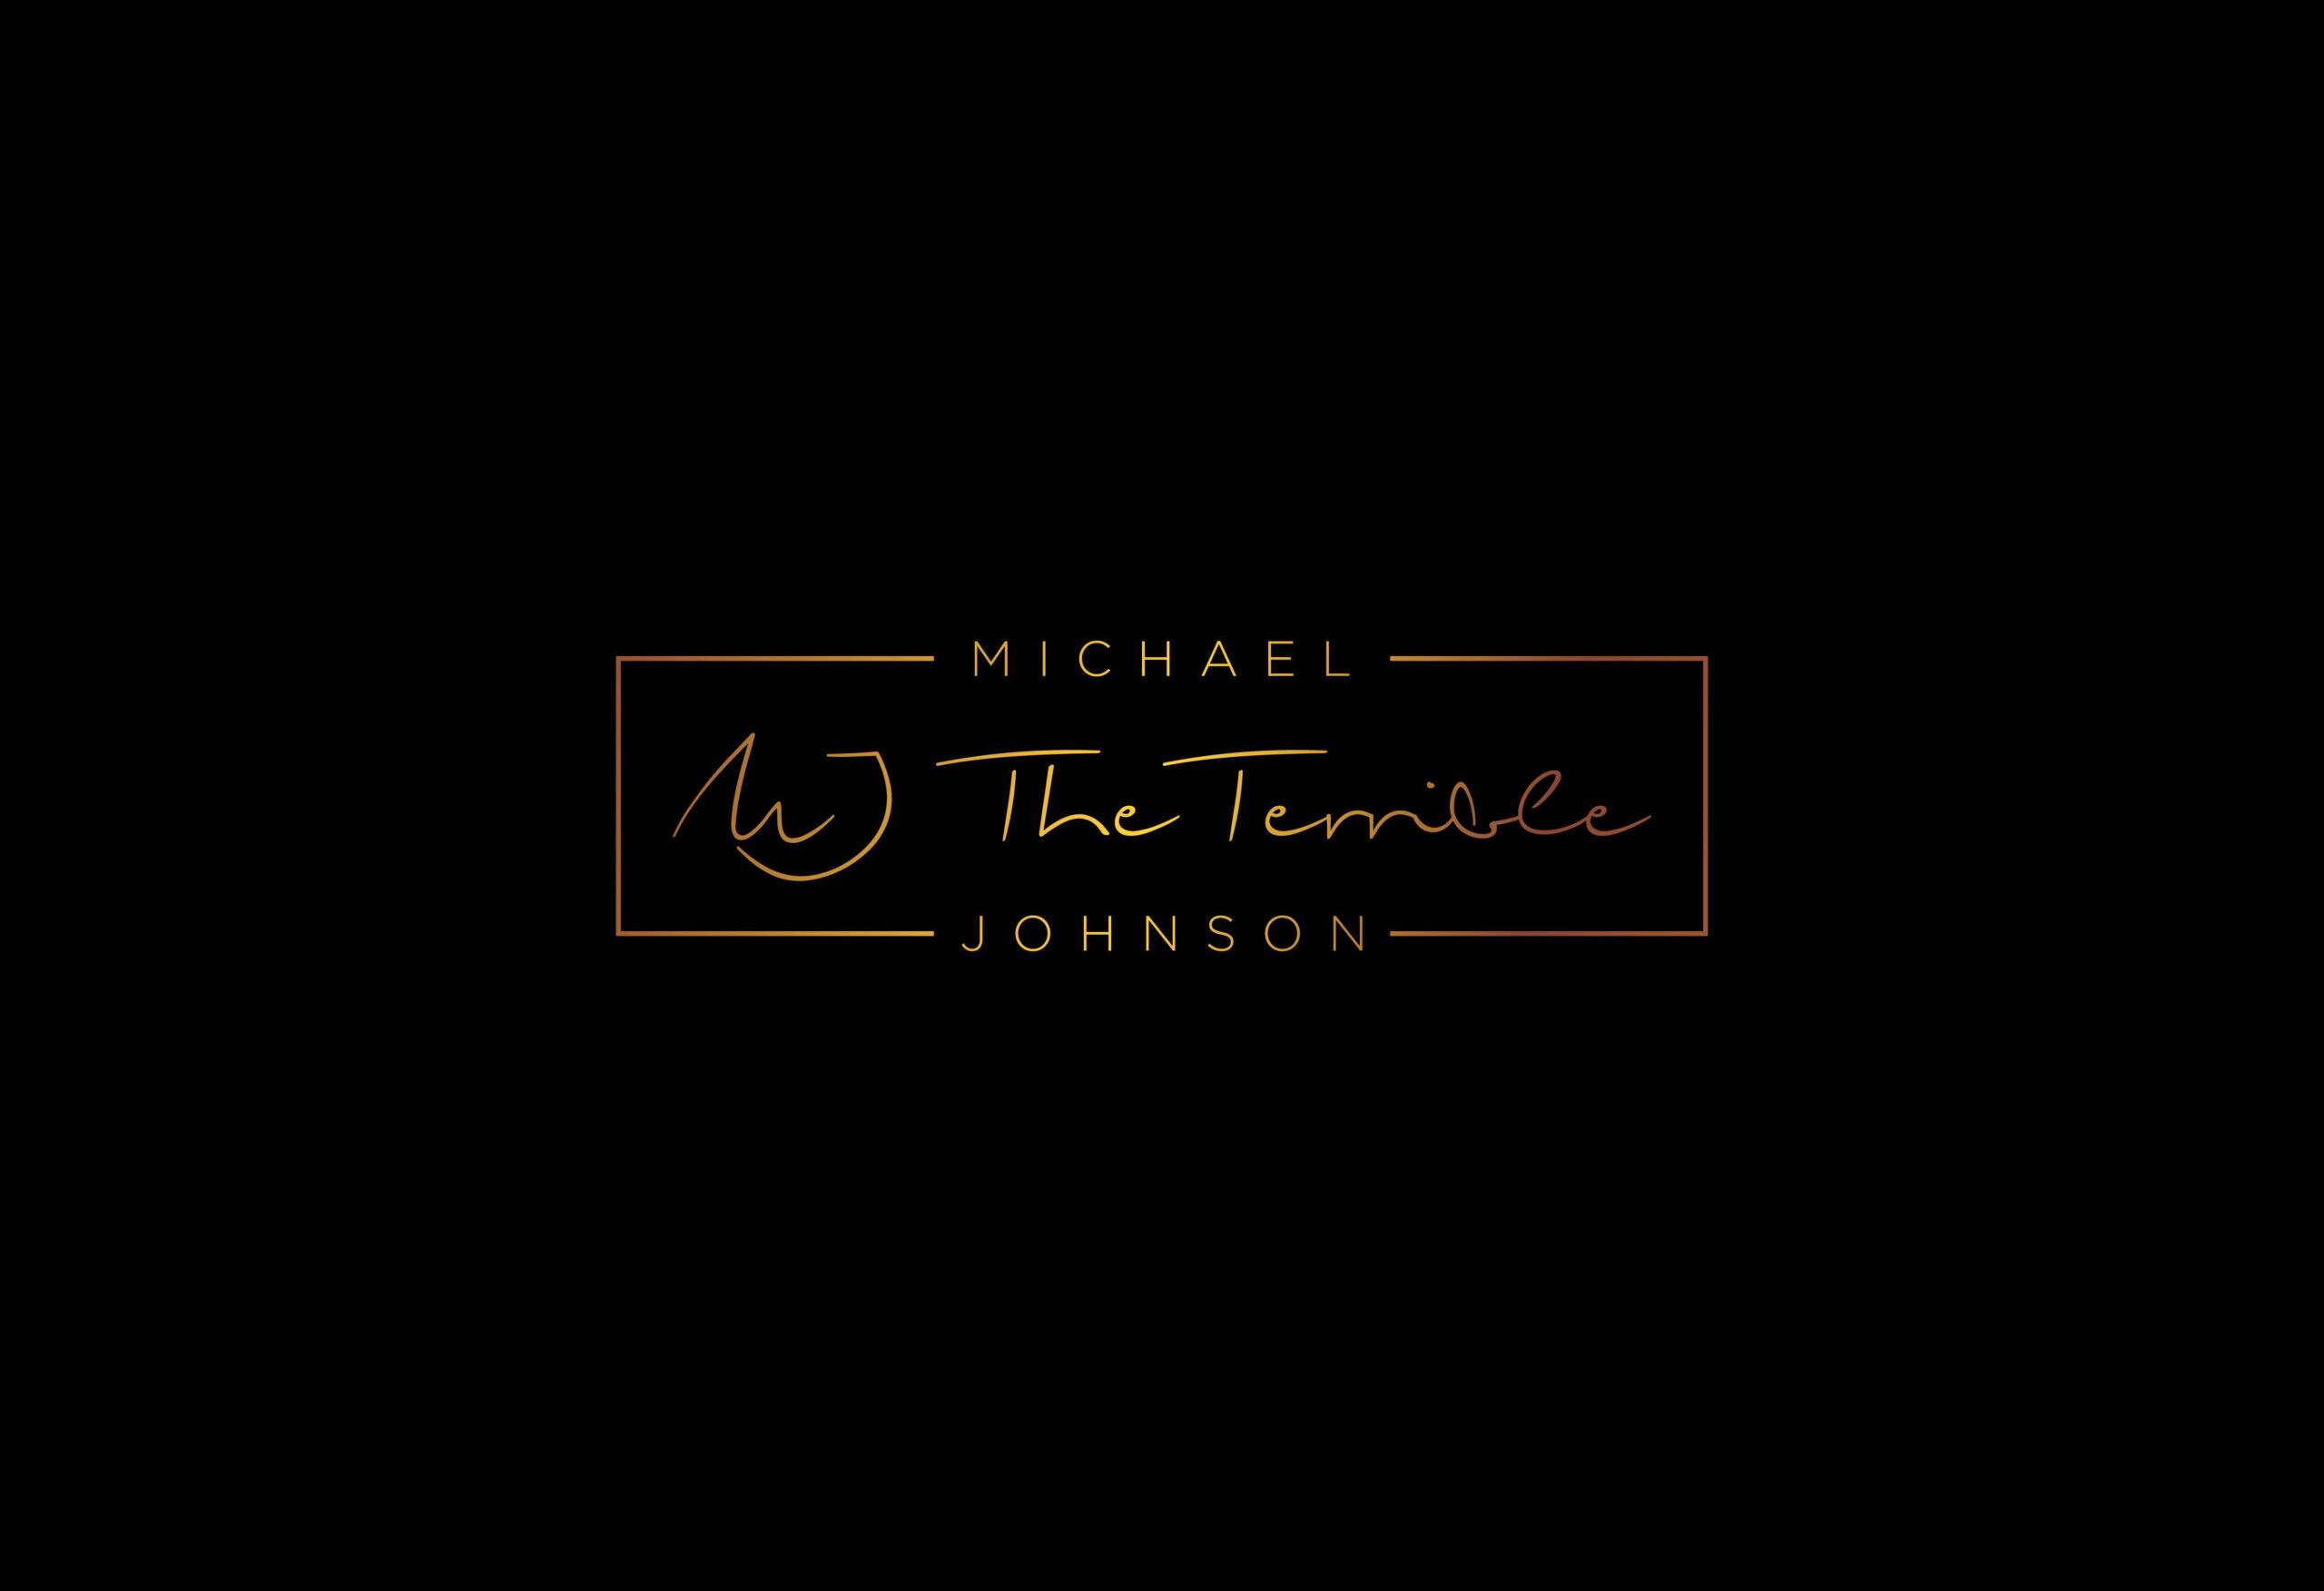 Michael MJ The Terrible Johnson Black and Gold Logo